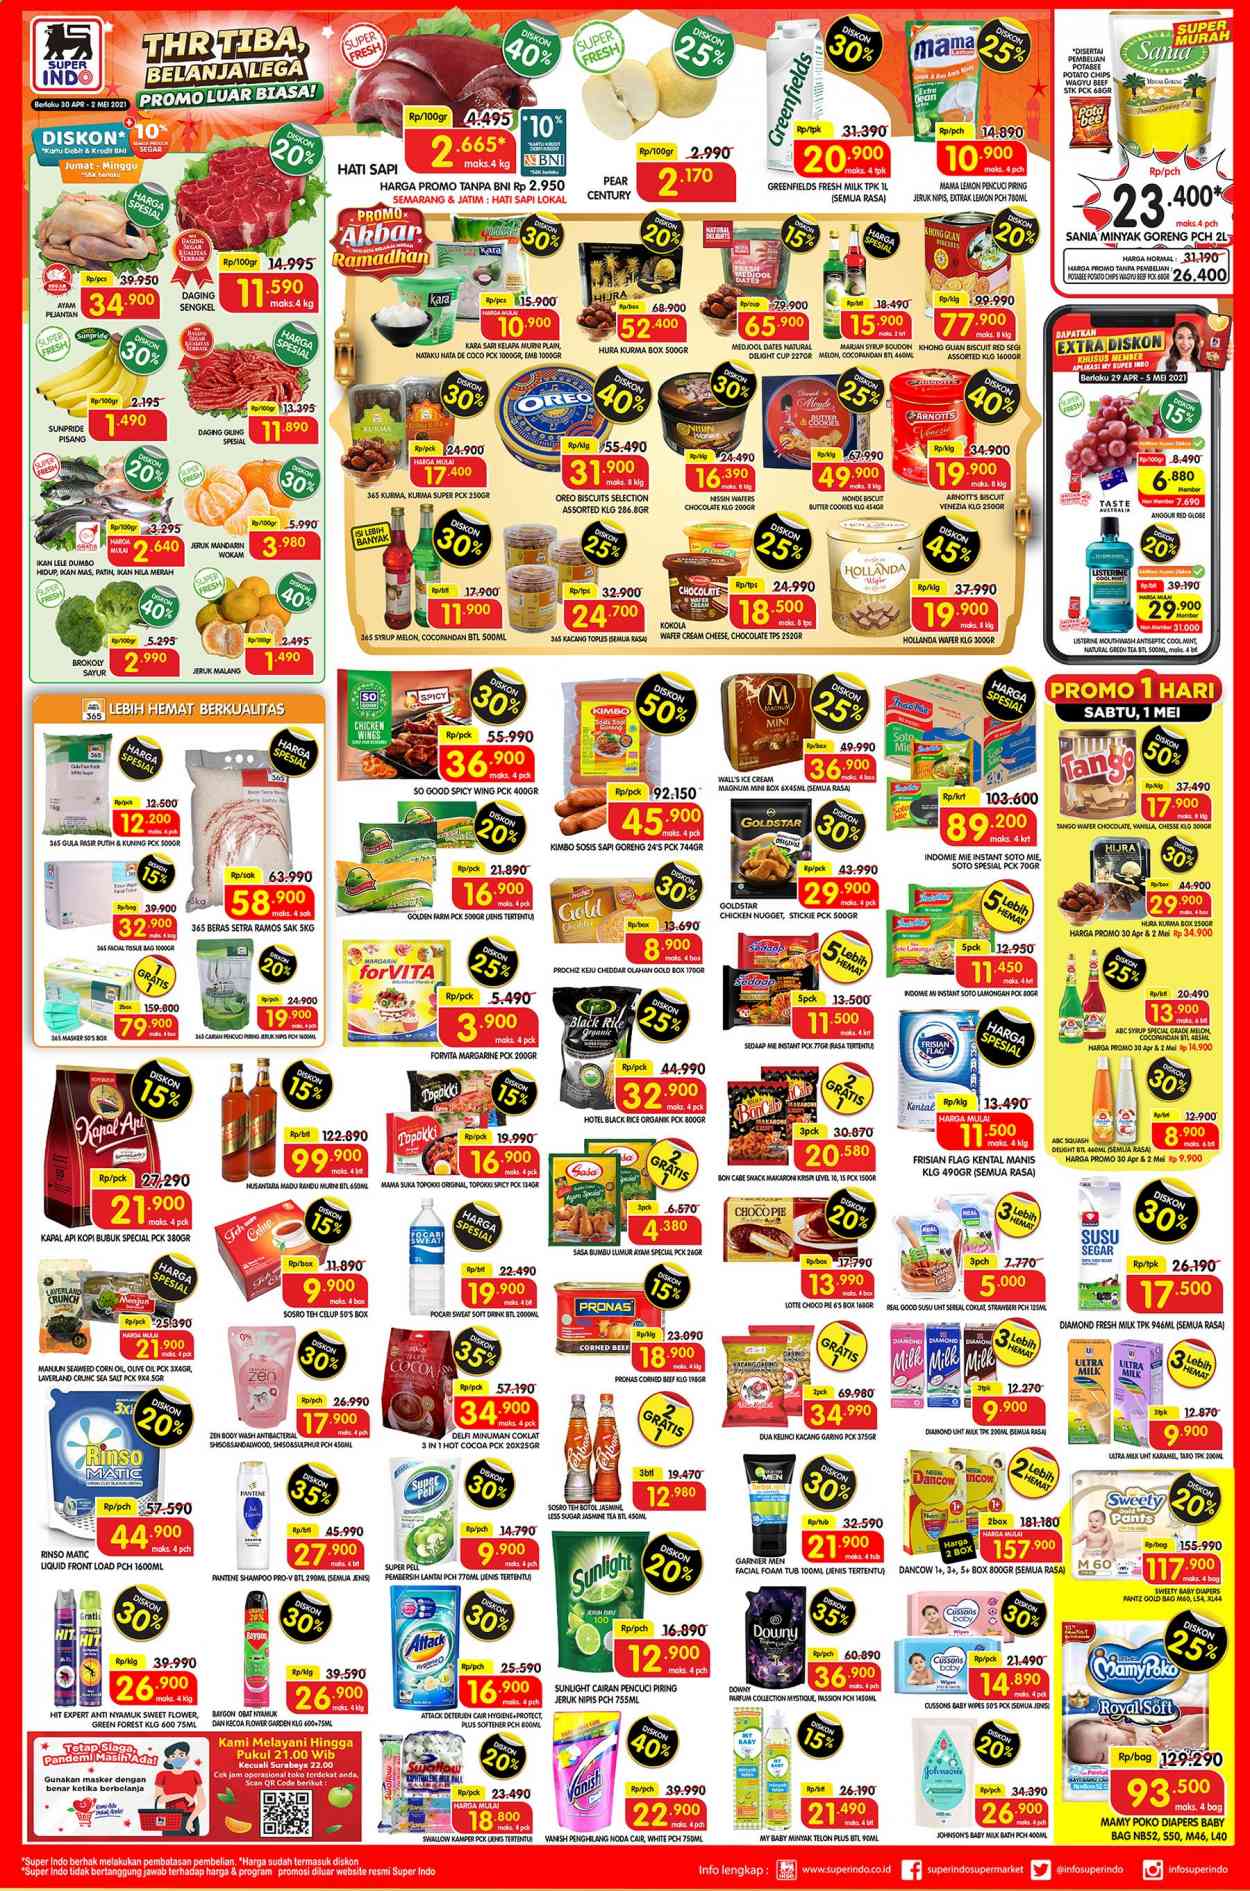 thumbnail - Promo Super INDO - 04/30/2021 - 05/02/2021 - Produk diskon - milk, tissue, rice, chicken, beef, gula pasir, kimbo sosis, goreng, body wash, wafer, wafers, wipes, toples, sugar, sunlight, swallow, sweety, tango, tango wafer, tea, softener, sosis sapi goreng, squash, rinso, red globe grapes, shampoo, potato chips, prochiz, pantene, pants, piring, pisang, lemon, listerine, magnum, mamy poko, margarine, my baby, nlg, olive oil, oreo, milk bath, mint, minyak, minyak goreng, minyak telon, mouse, melon, kapal, jeruk, jeruk nipis, kacang, ice cream, indomie, chicken wings, chips, chocolate, hit, cheddar, gula, harga mulai, forvita, garnier, gold, green tea, dolce & gabbana, downy, corn, corn oil, corned beef, cream cheese, cussons, daging giling, dates, delfi, coco, cocoa, collection, cookies, butter, beef meat, beras, biscuits, box, bag, bath, baygon, anggur, anti nyamuk, ball, drink. Halaman 1.